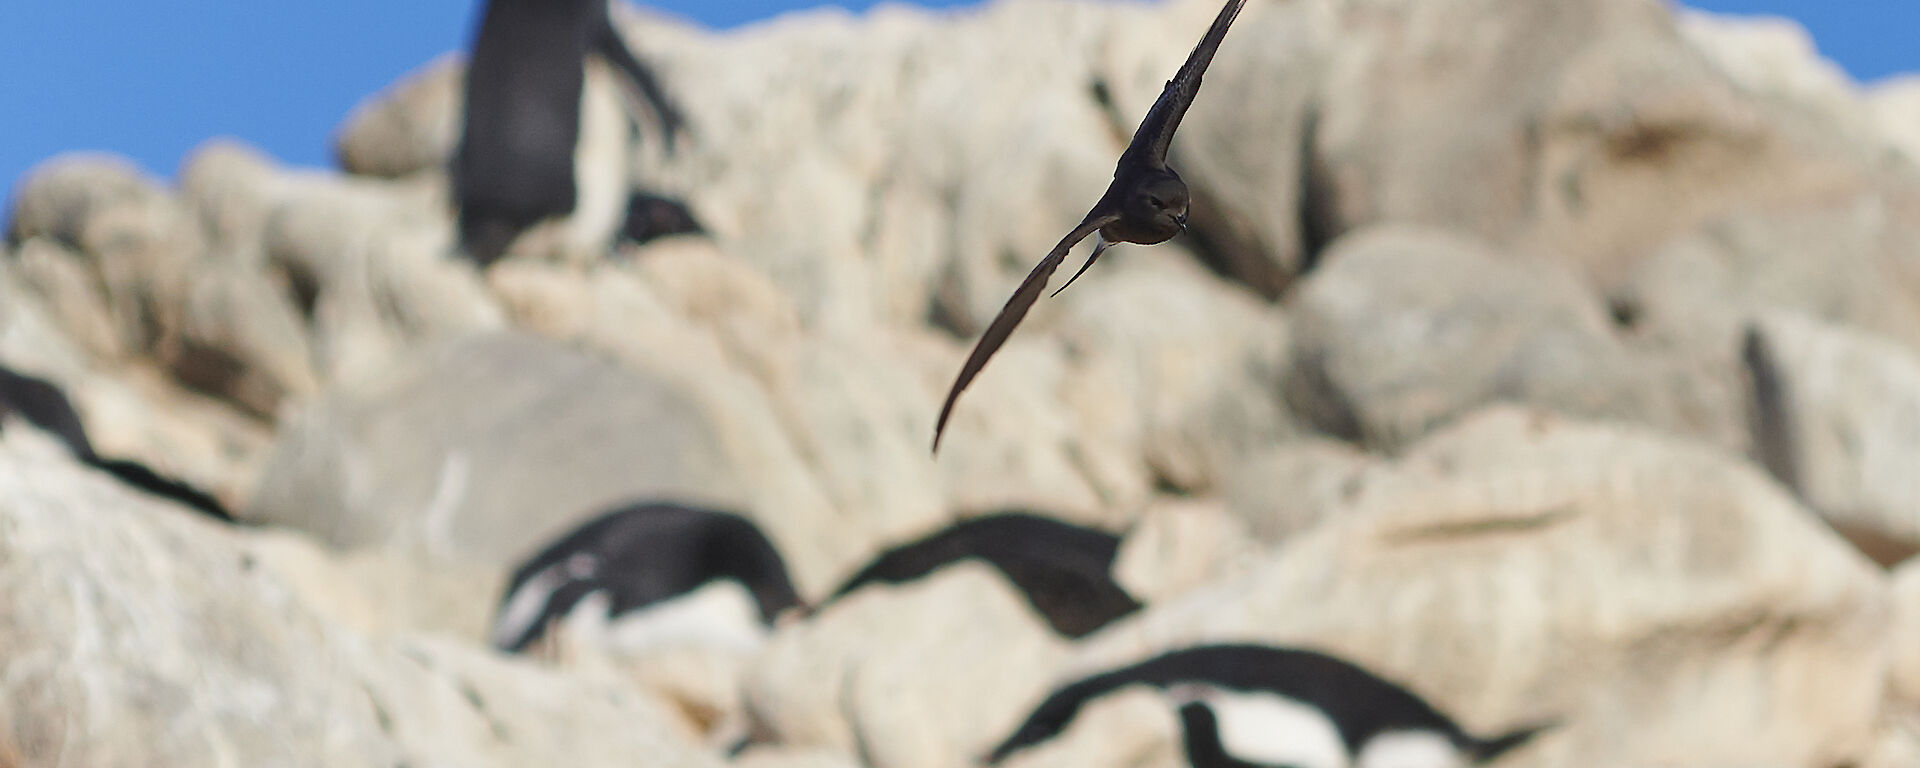 A black Wilson’s Storm Petrel bird swoops through the frame